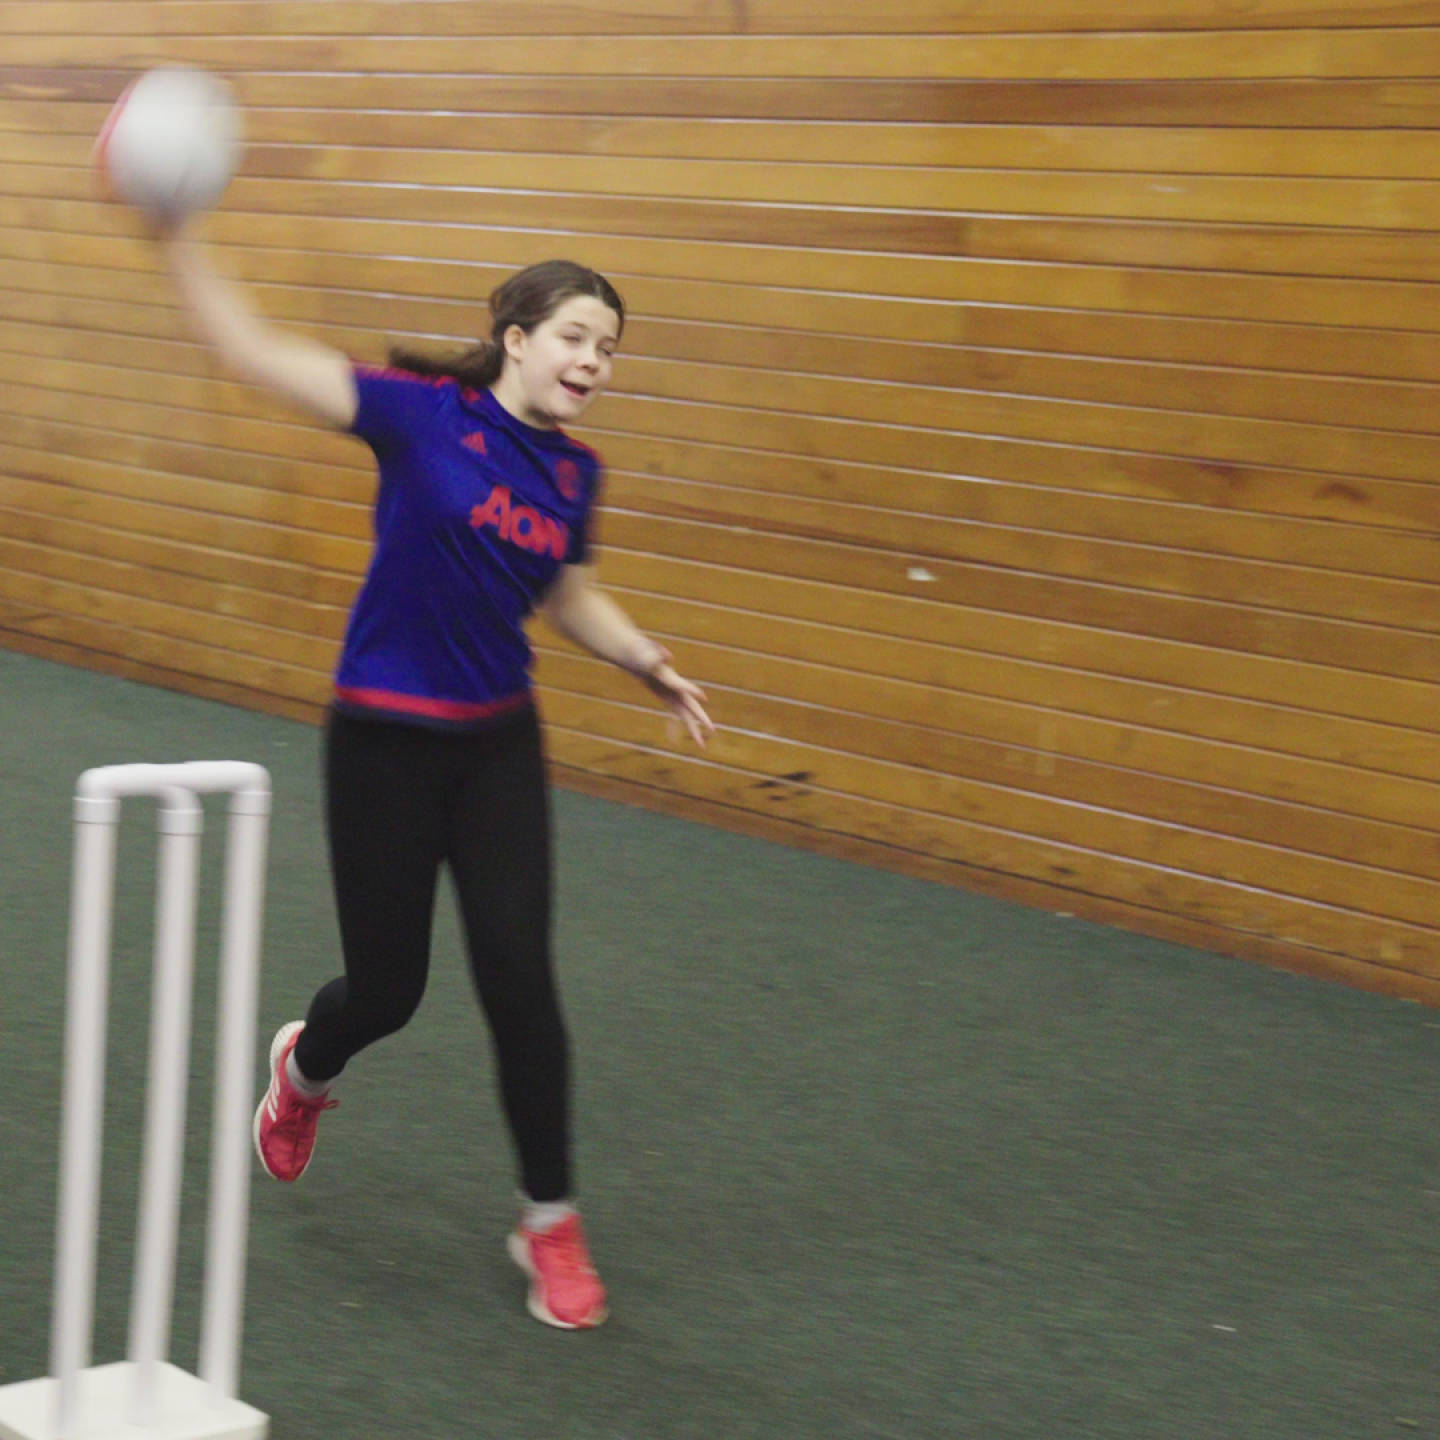 Freya bowling cricket ball